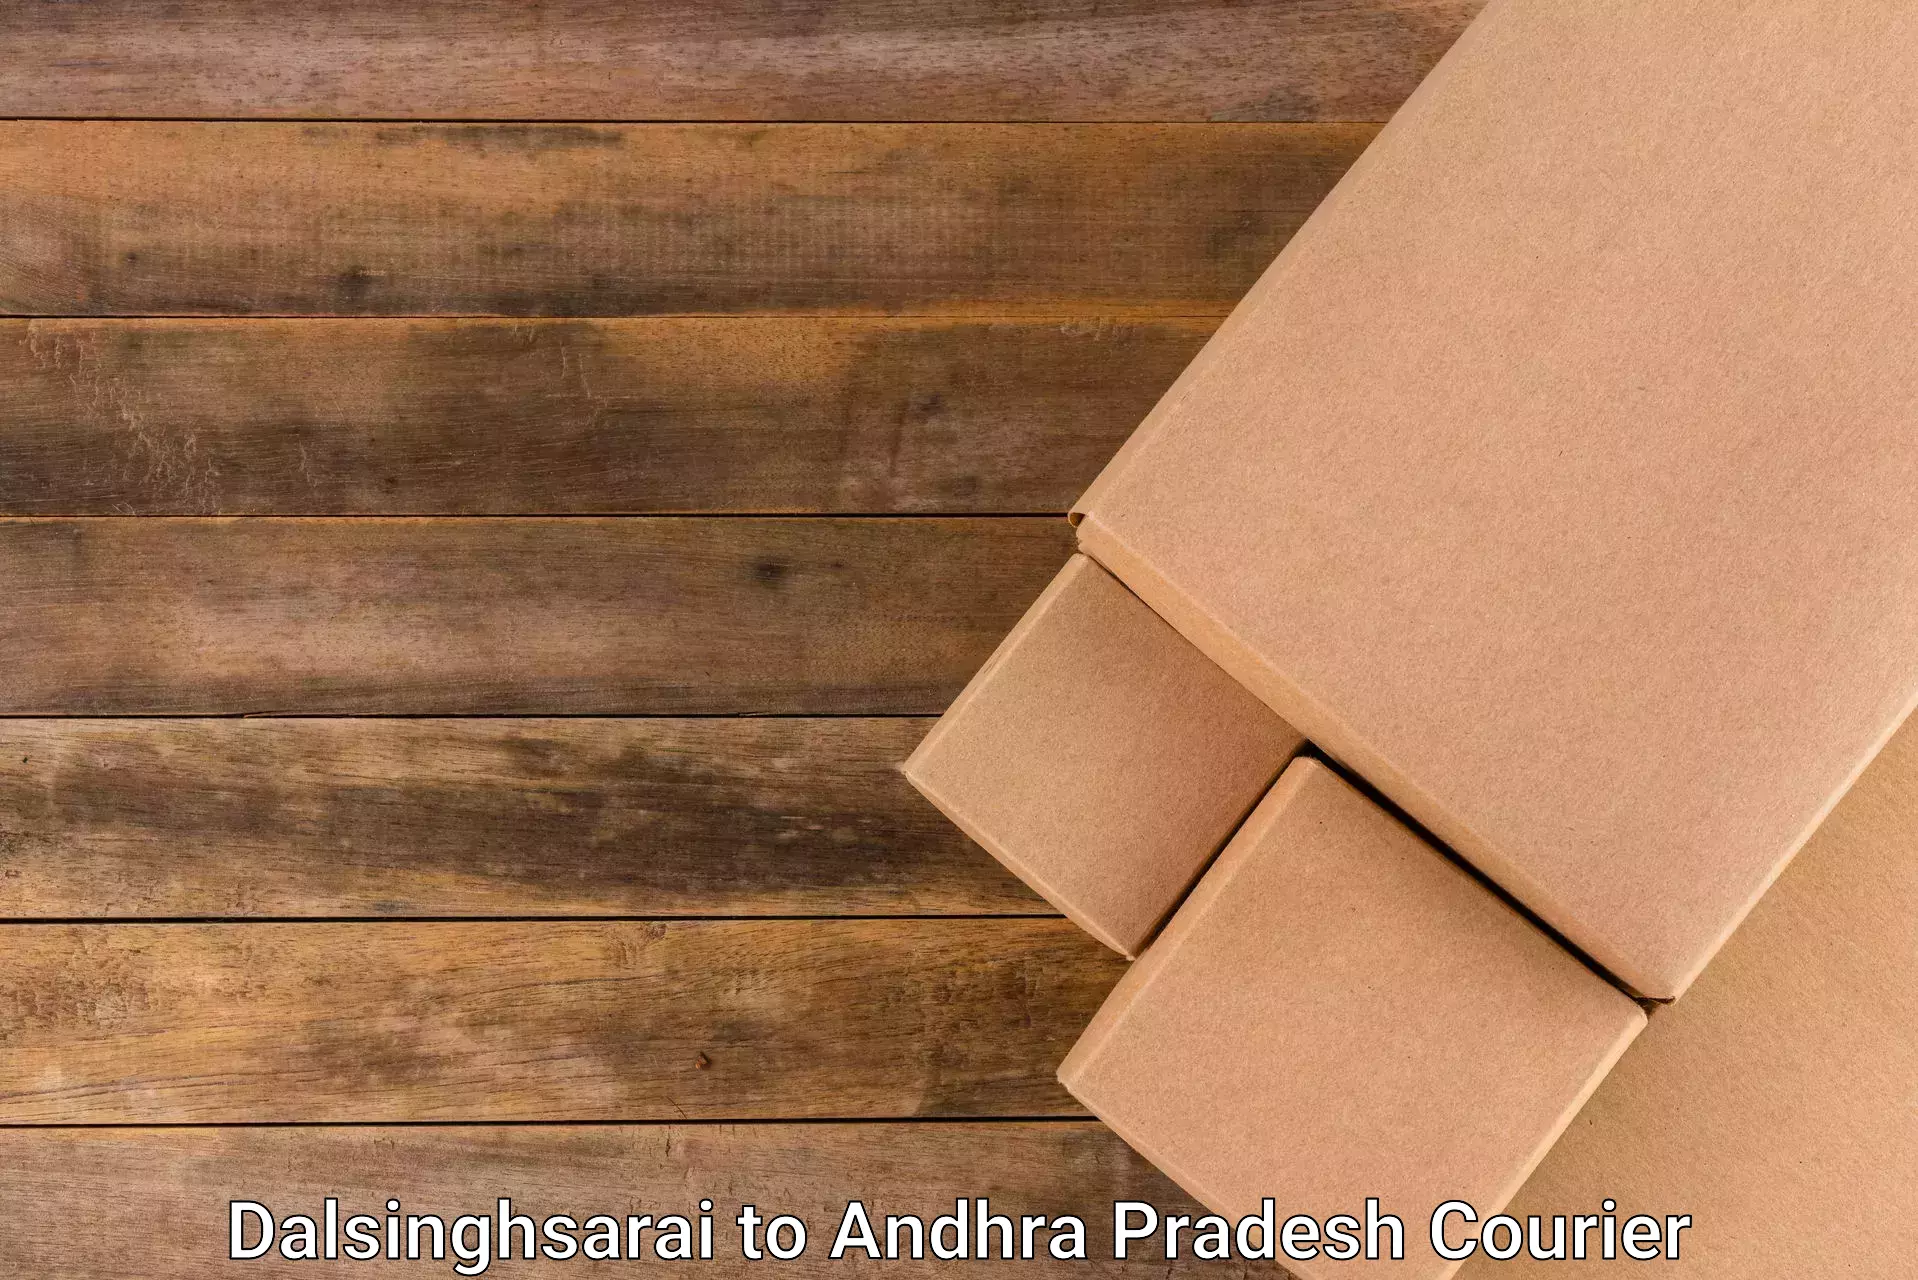 Multi-service courier options Dalsinghsarai to Andhra Pradesh